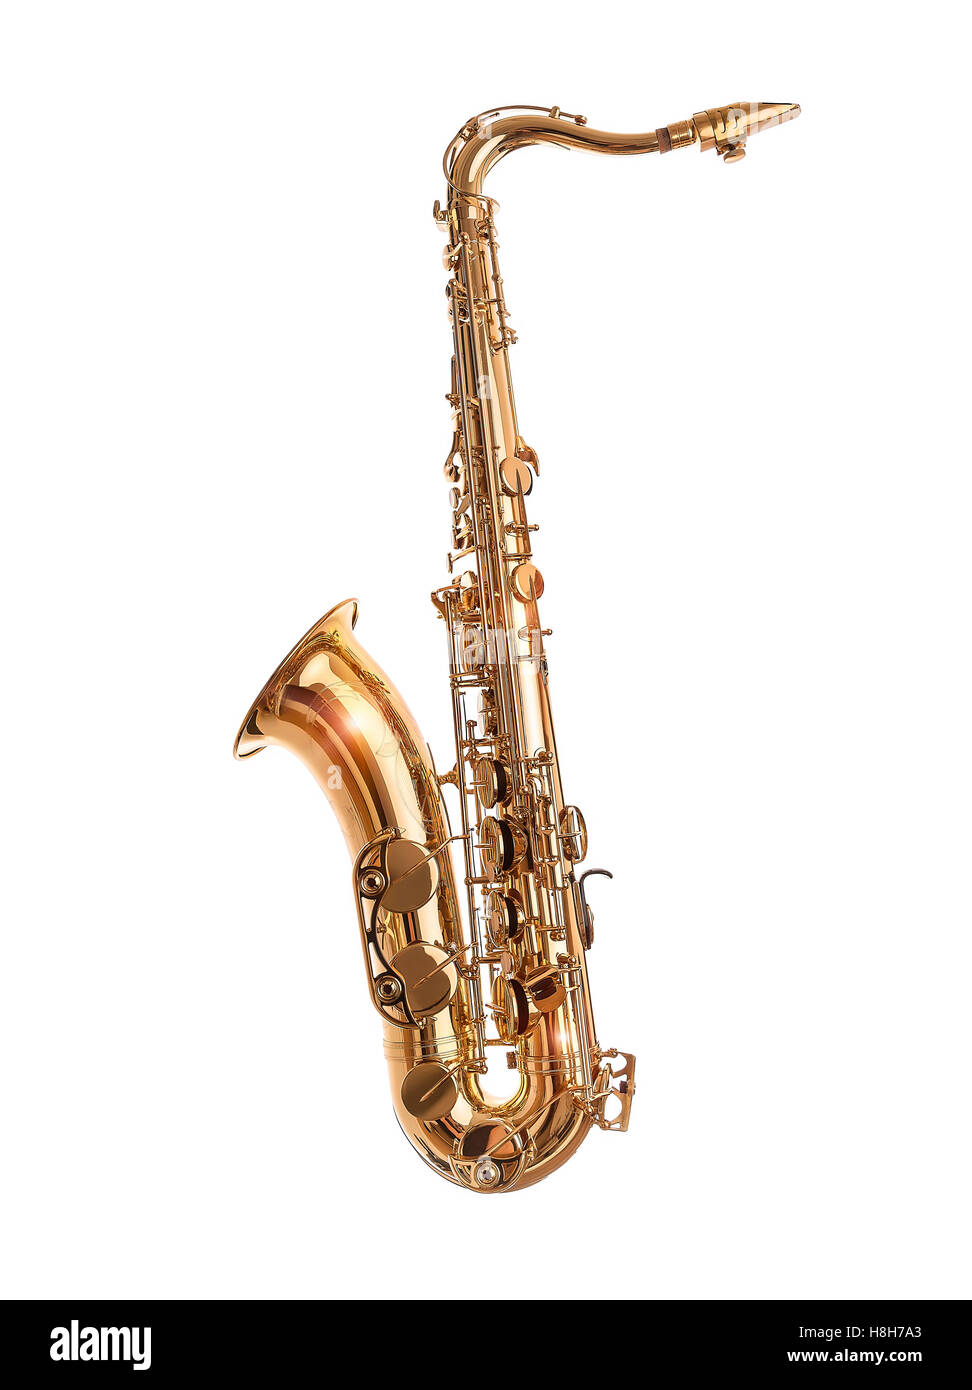 Golden Saxophone isolated on white. Stock Photo